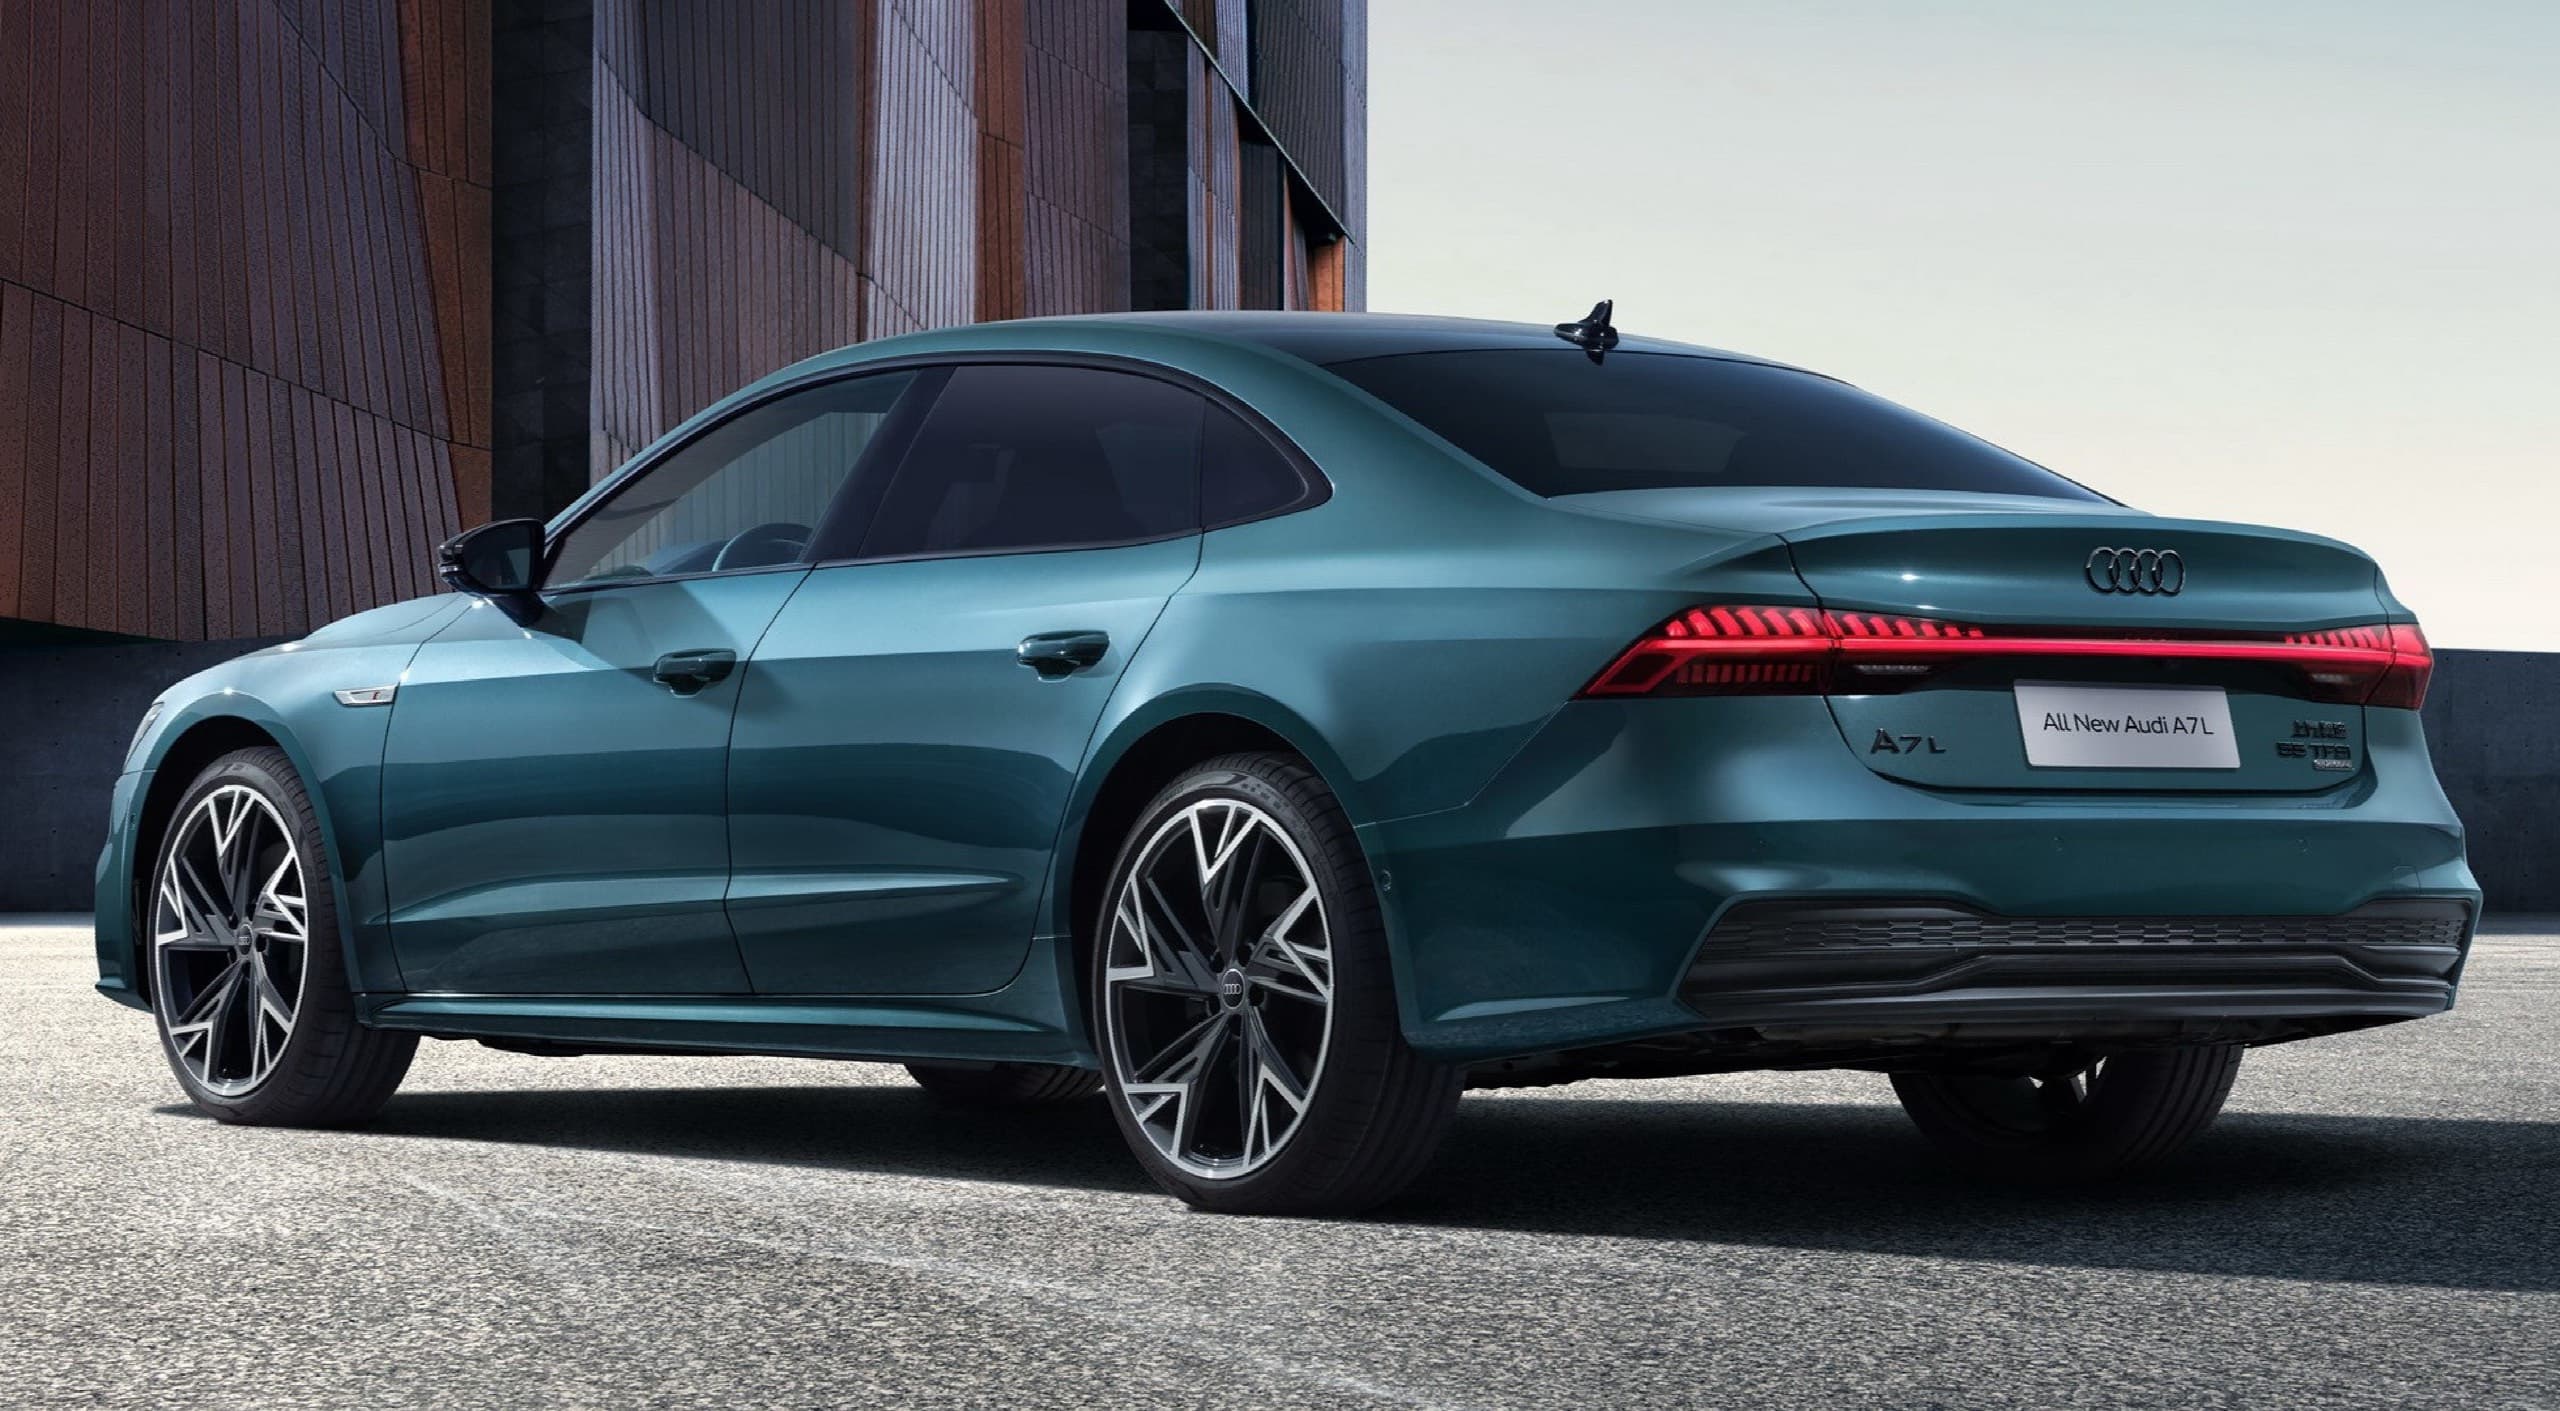 2022 Audi A7 – Invoice Pricing